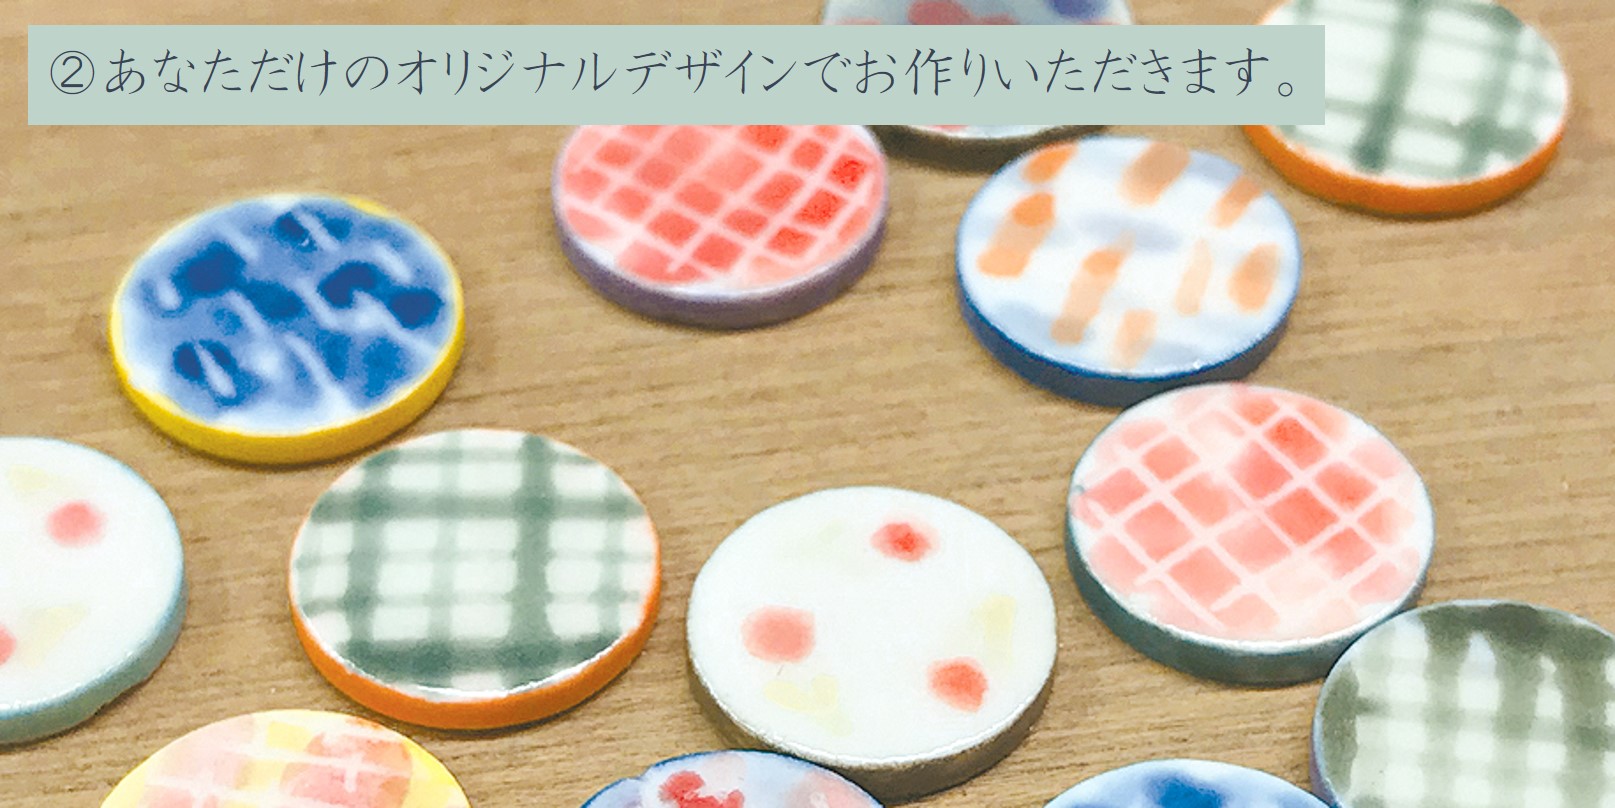 Make Original Accessories with Minoyaki Tiles